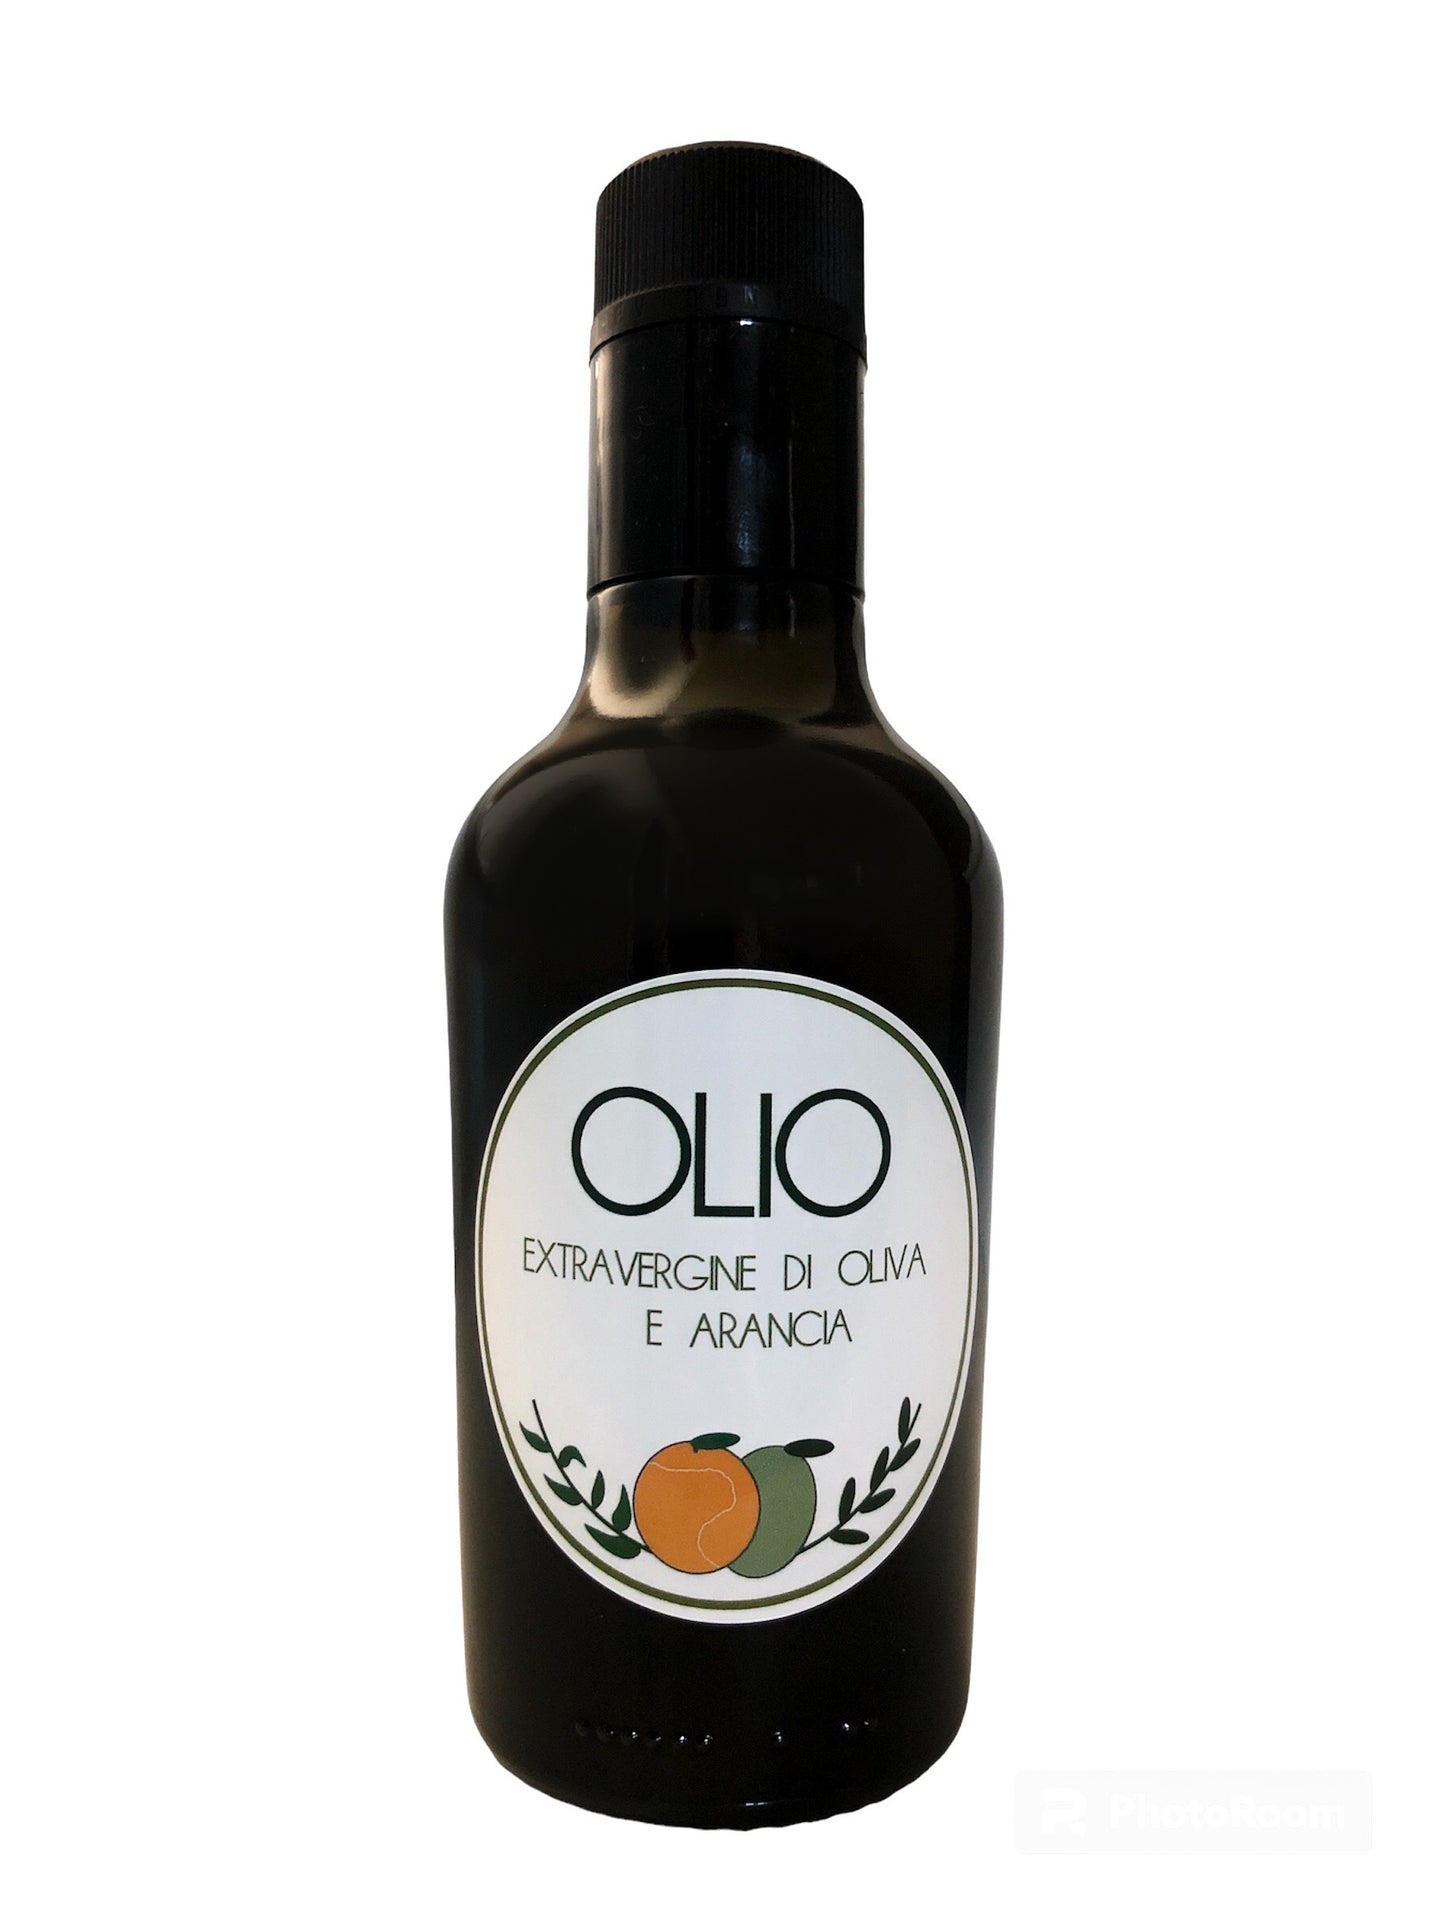 Olio Extravergine di oliva e Arancia